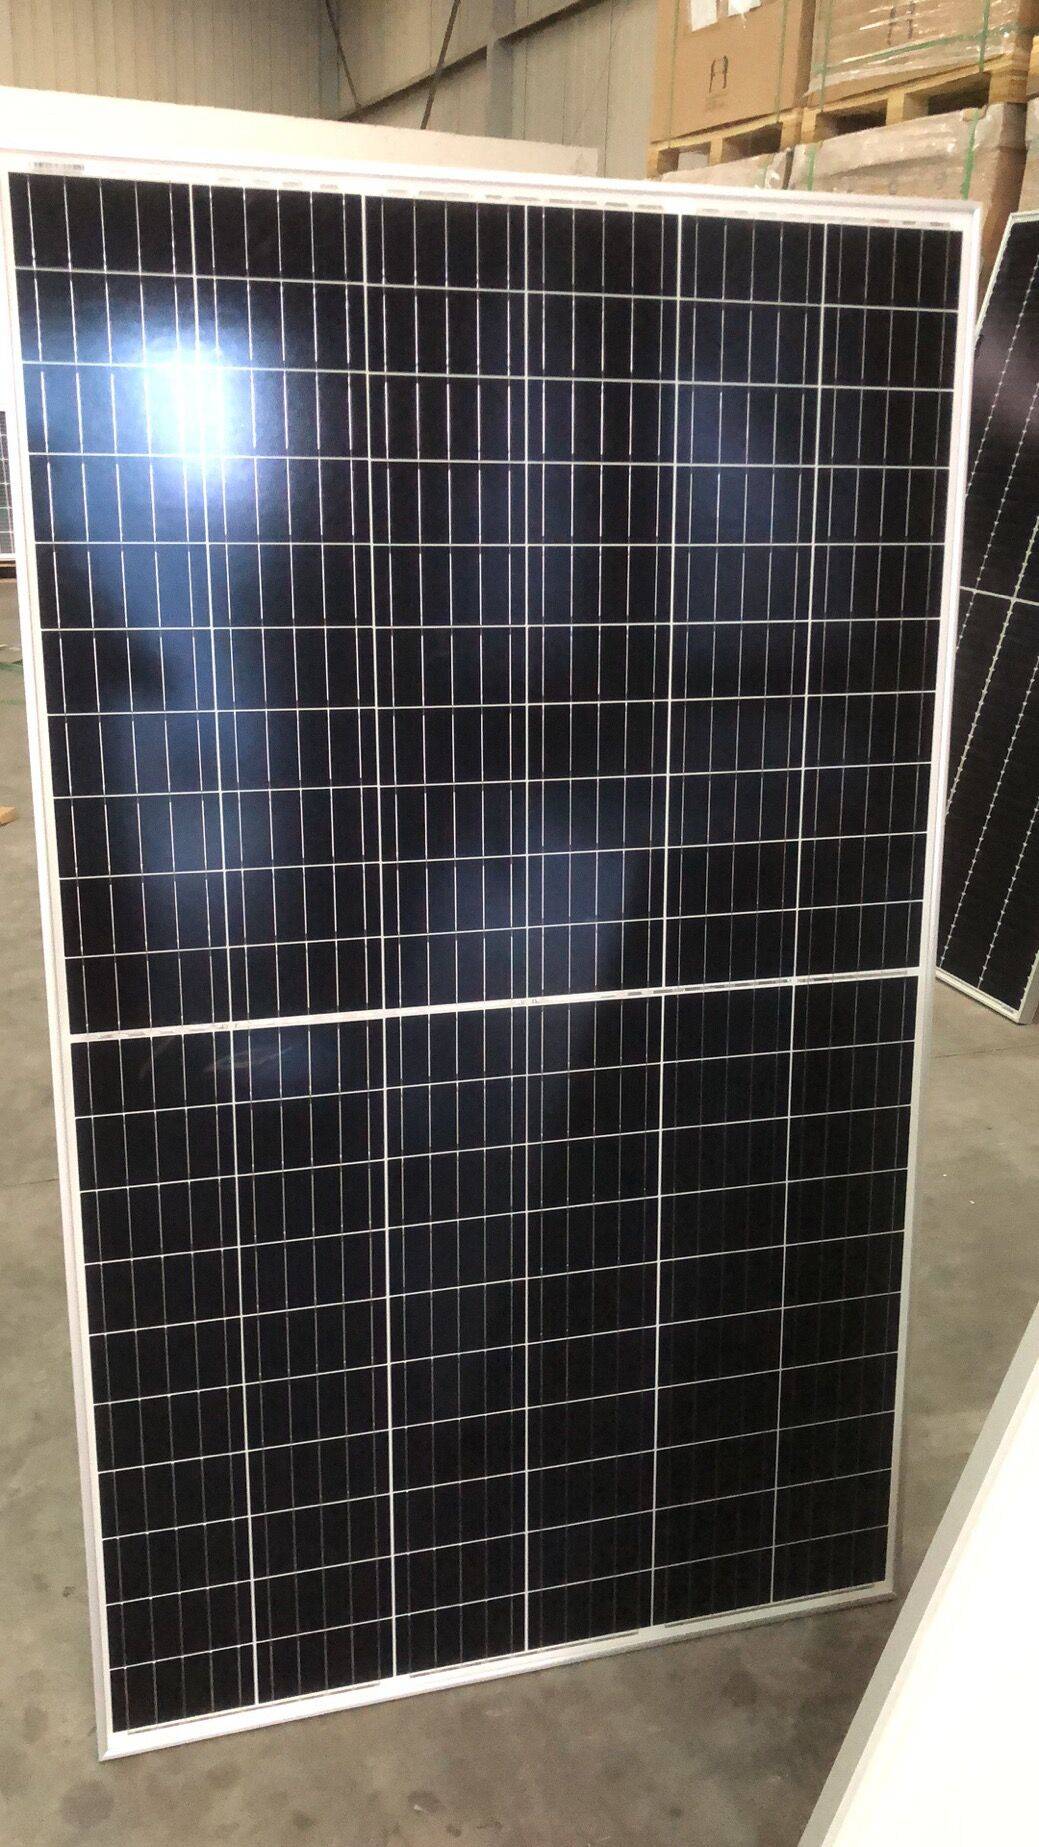 Jinko Cheetah 440W Monocrystalline Solar Panel